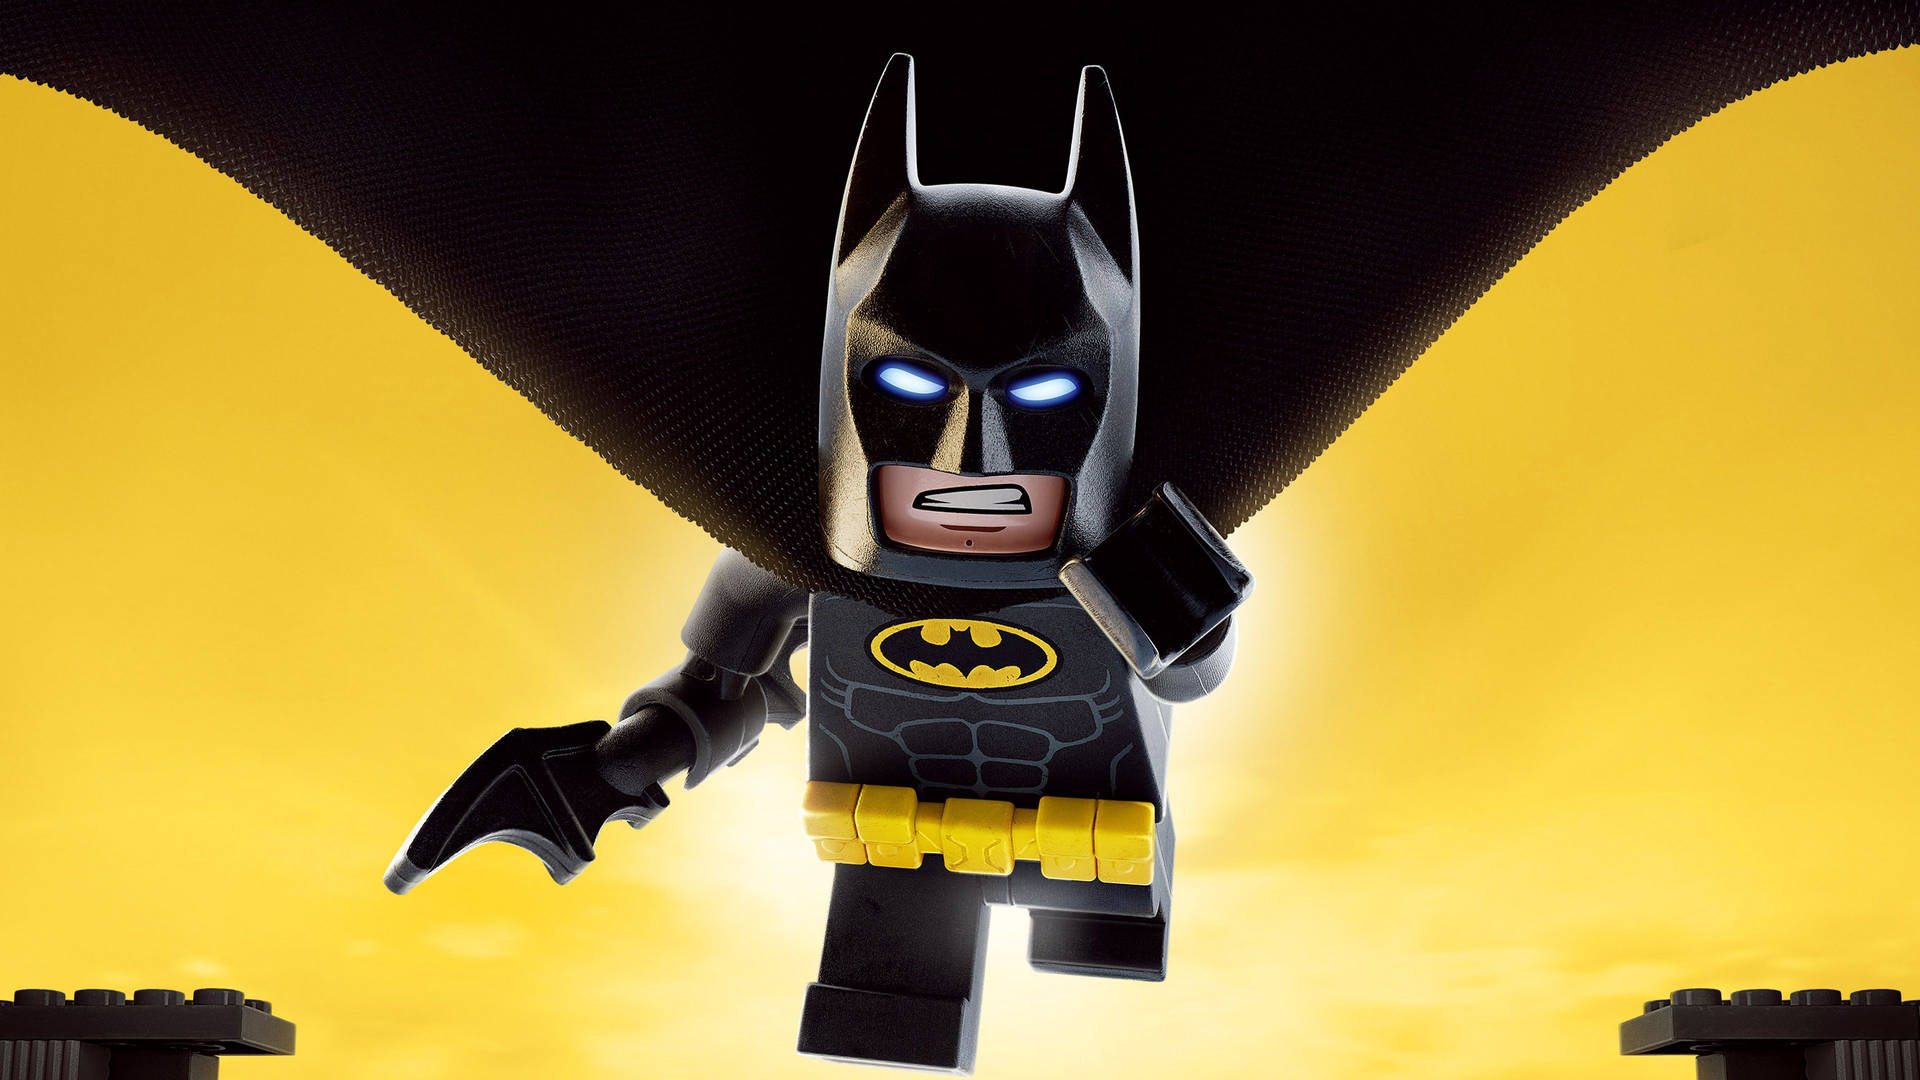 Papel De Parede 4k Do Lego Batman Angry Birds. Papel de Parede